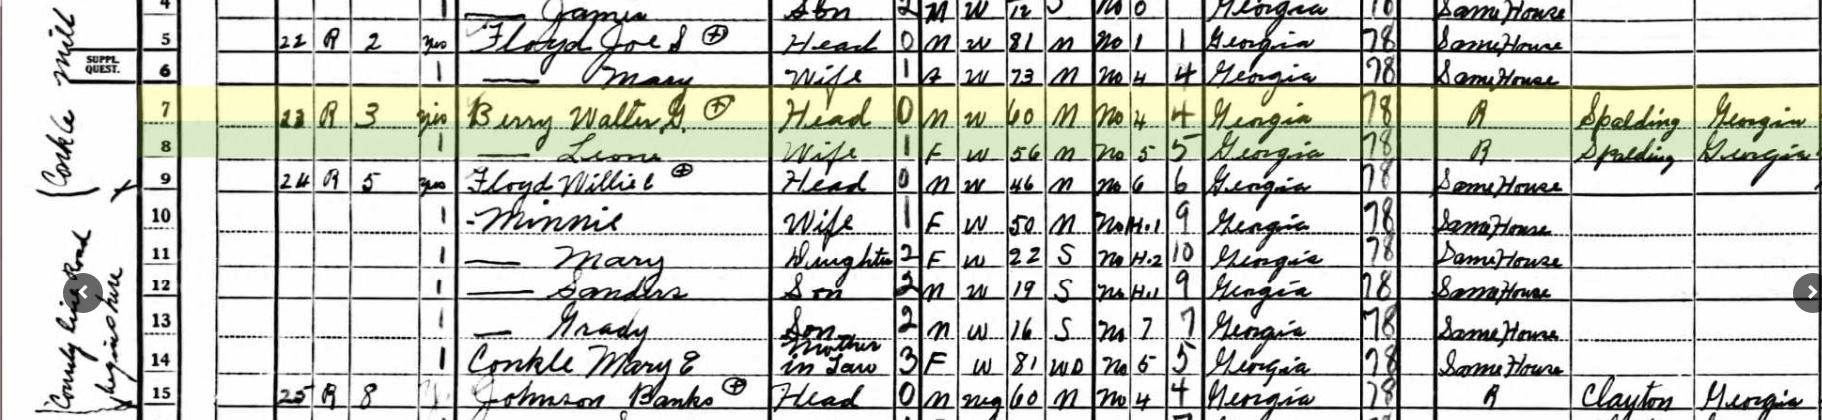 Walter Glen Berry 1940 census GA